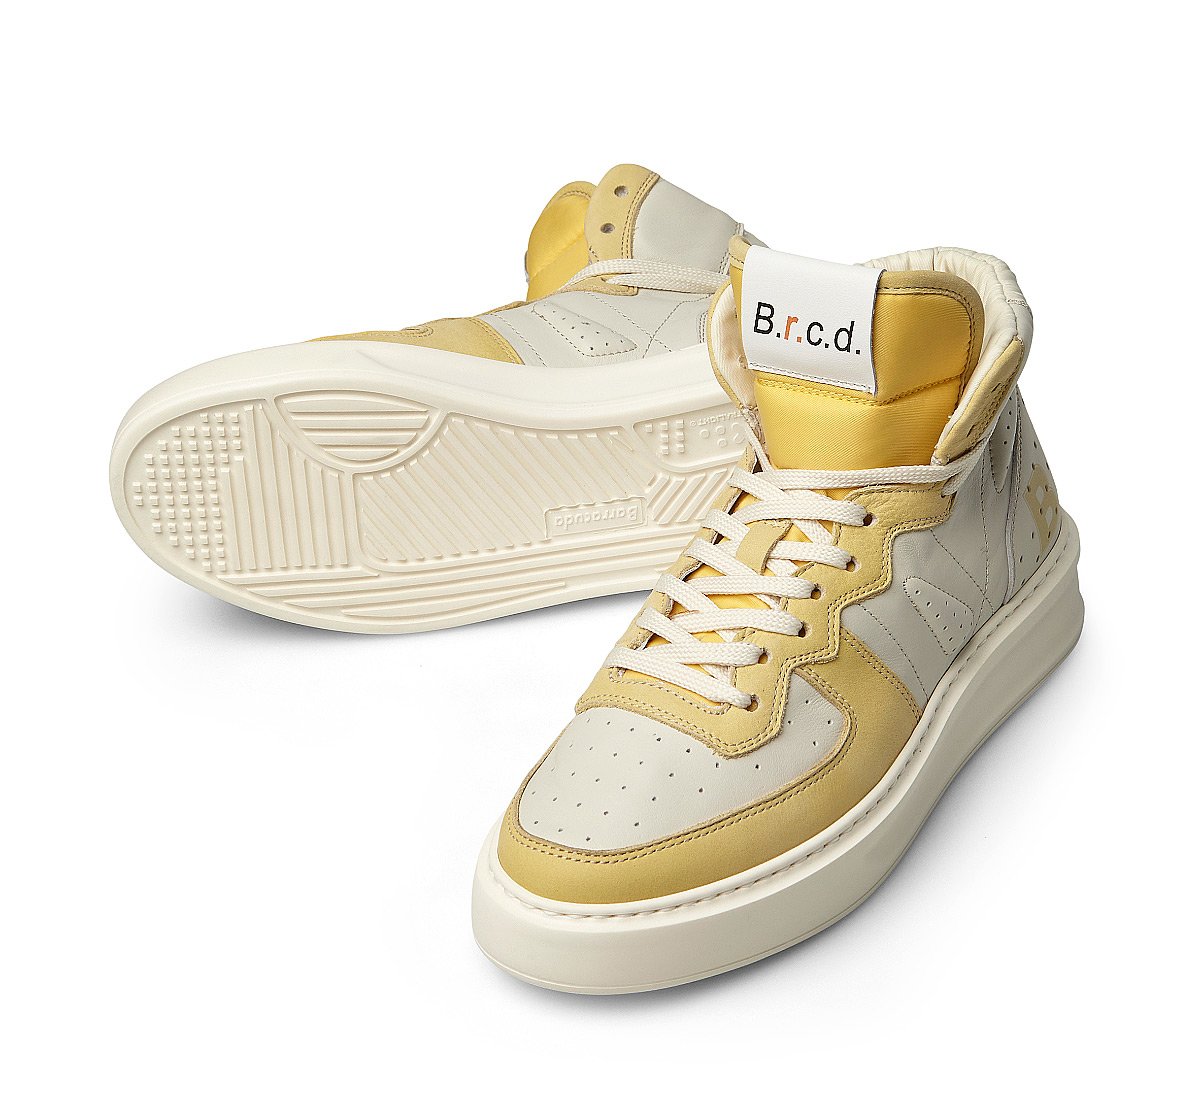 Sneaker Barracuda B.R.C.D.